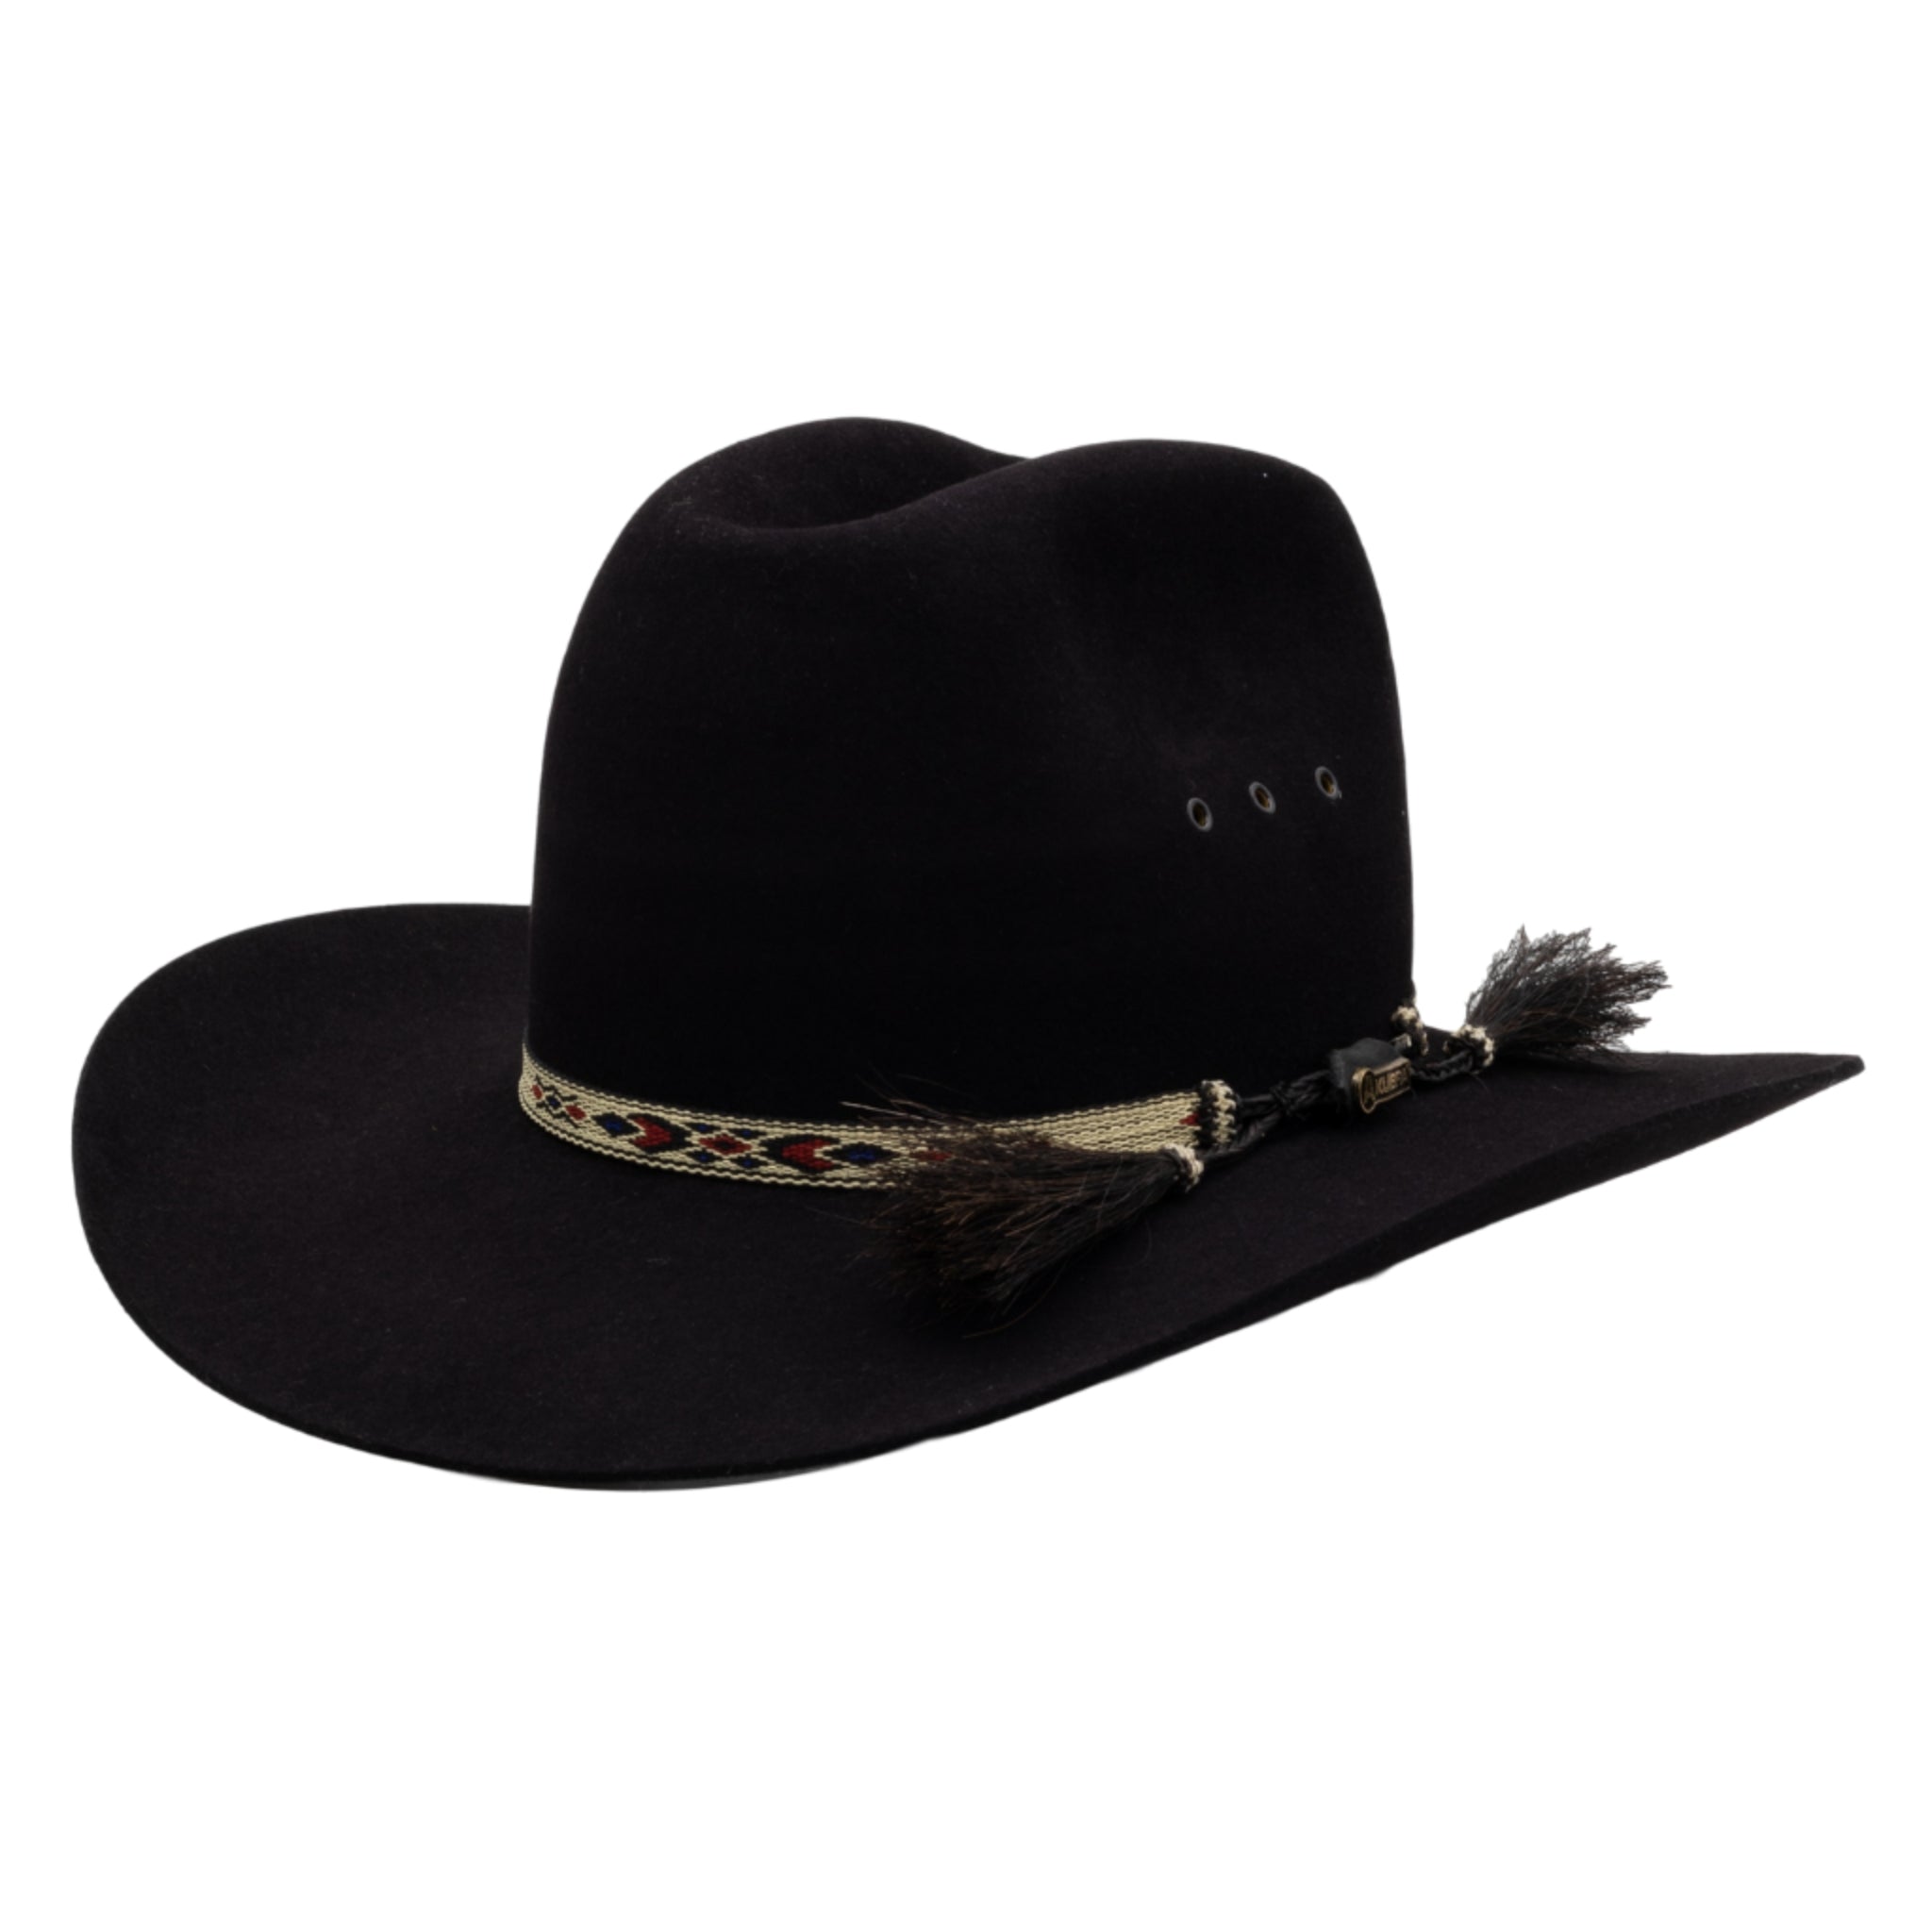 Akubra Stony Creek hat - Black